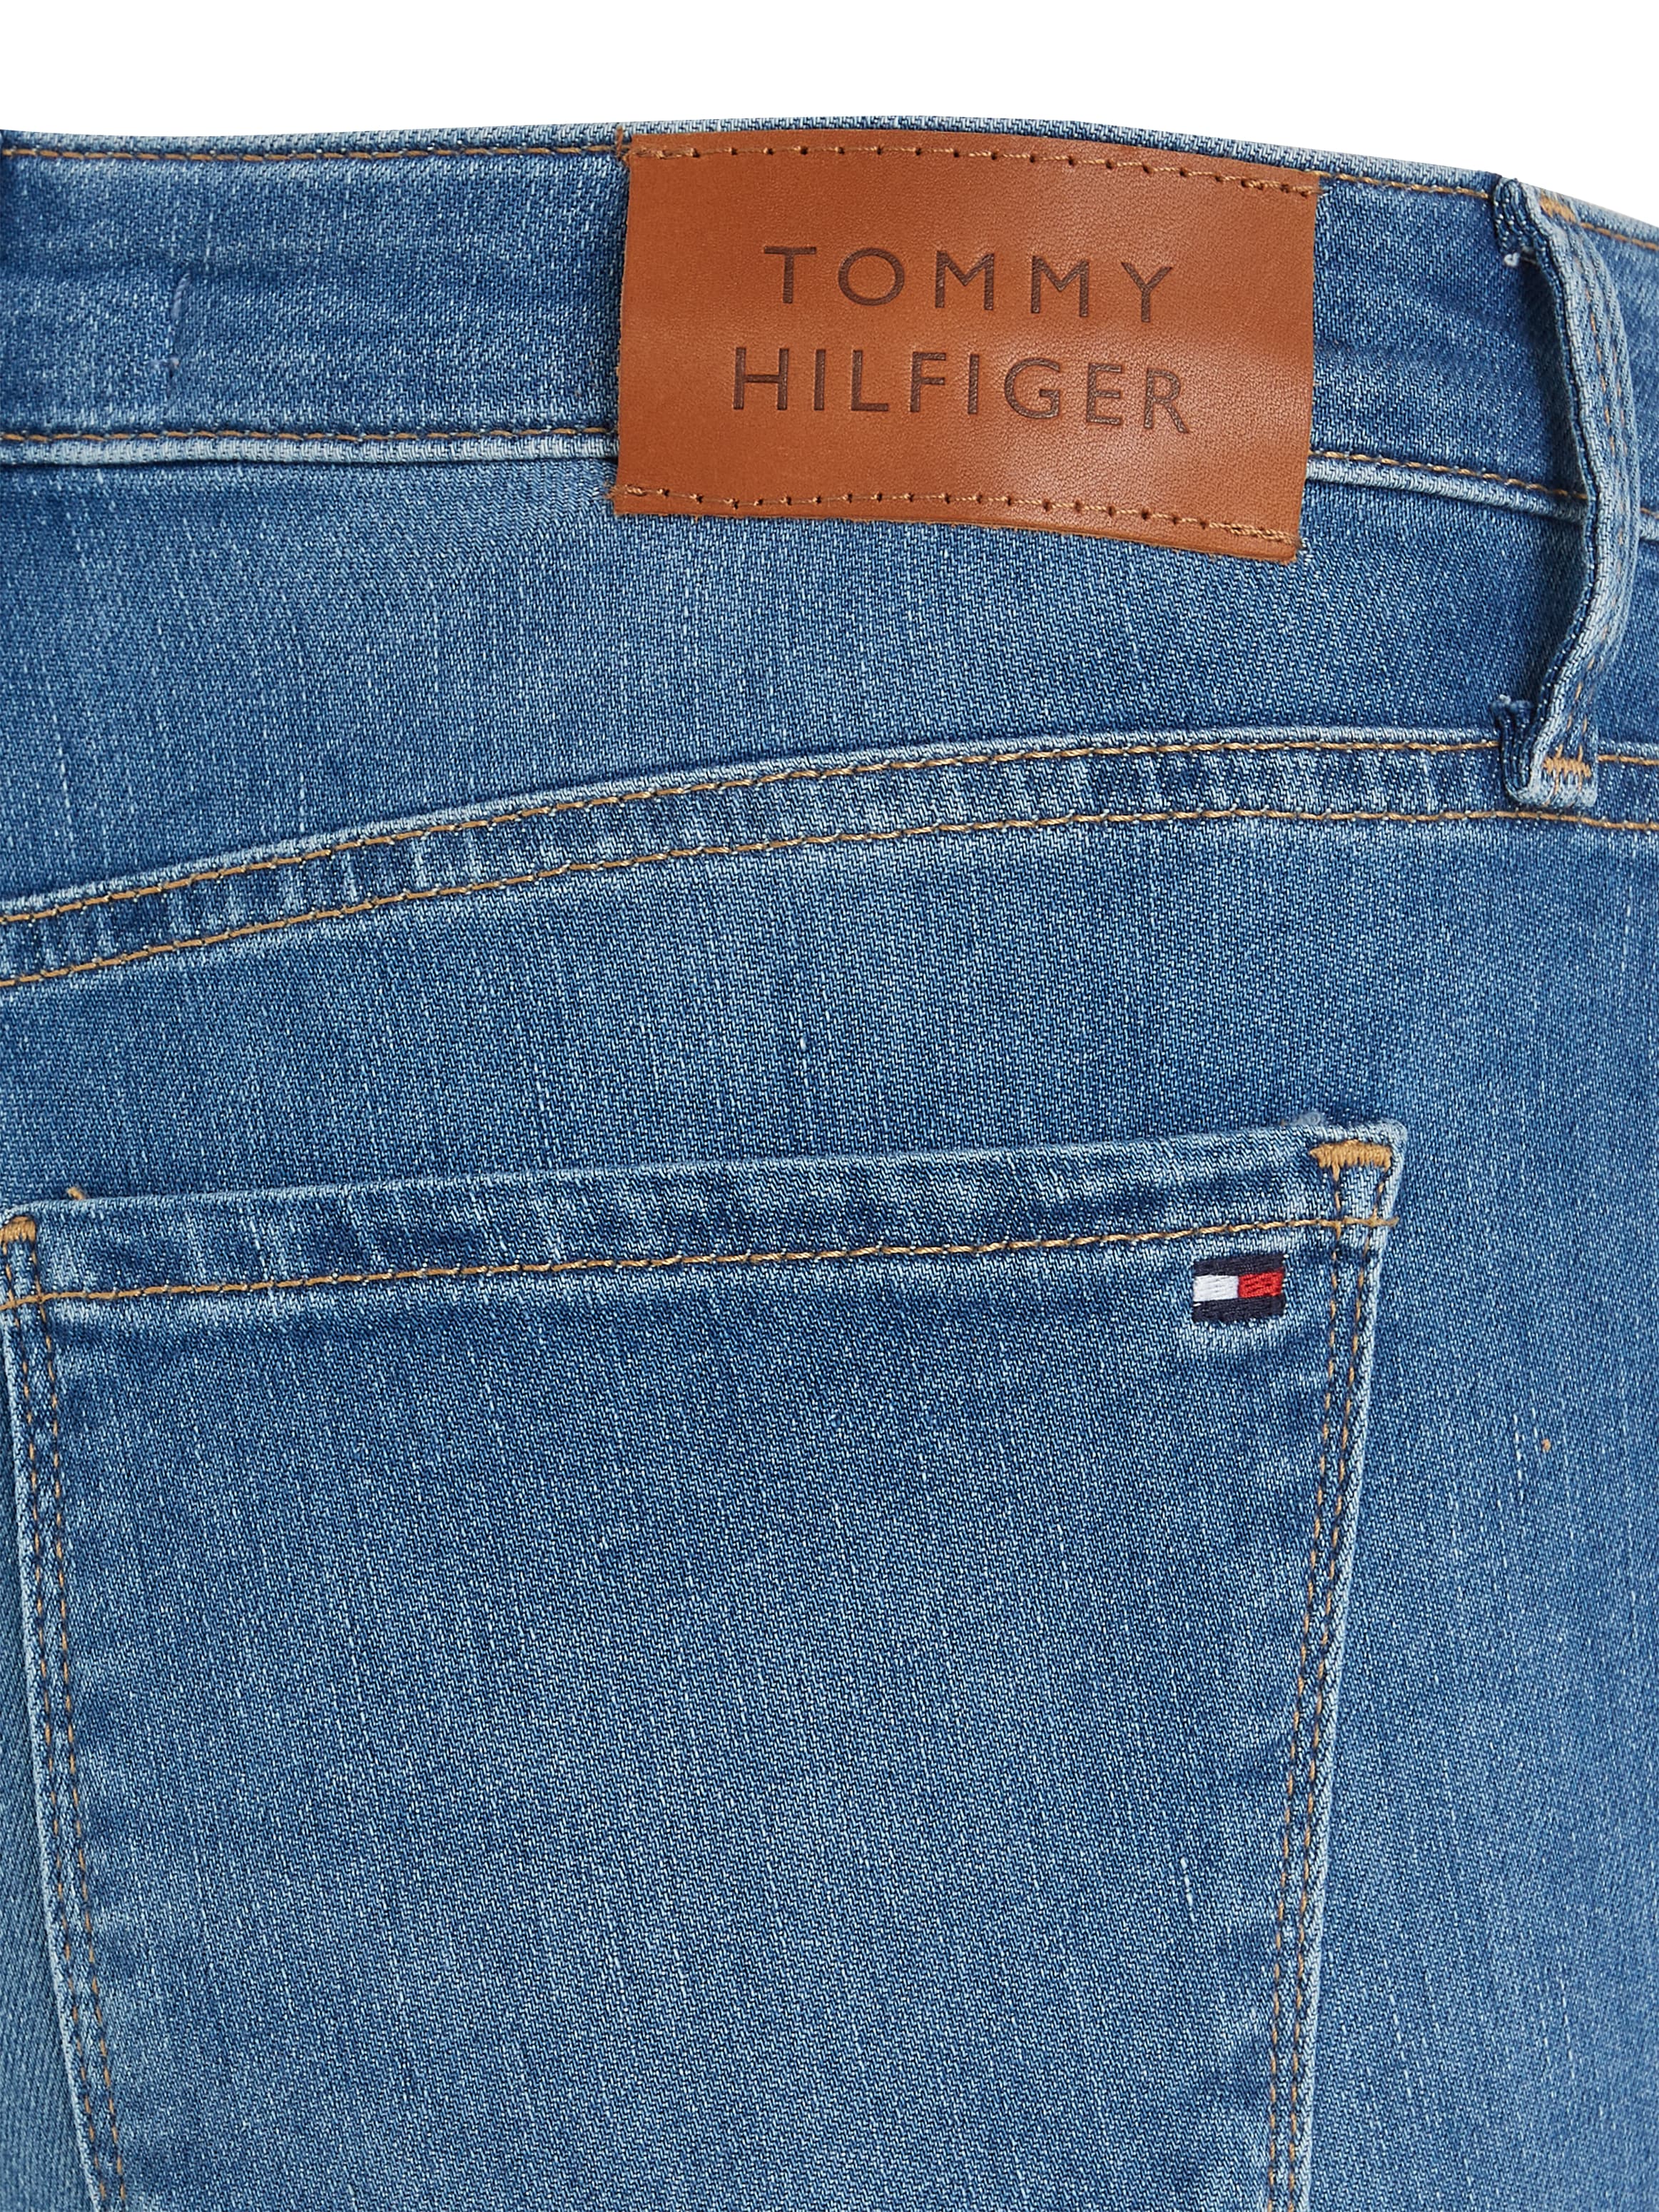 Tommy Hilfiger »TH Tommy Hilfiger IZZY«, bei A FLEX bestellen SKINNY Skinny-fit-Jeans Logo-Badge COMO mit RW OTTO